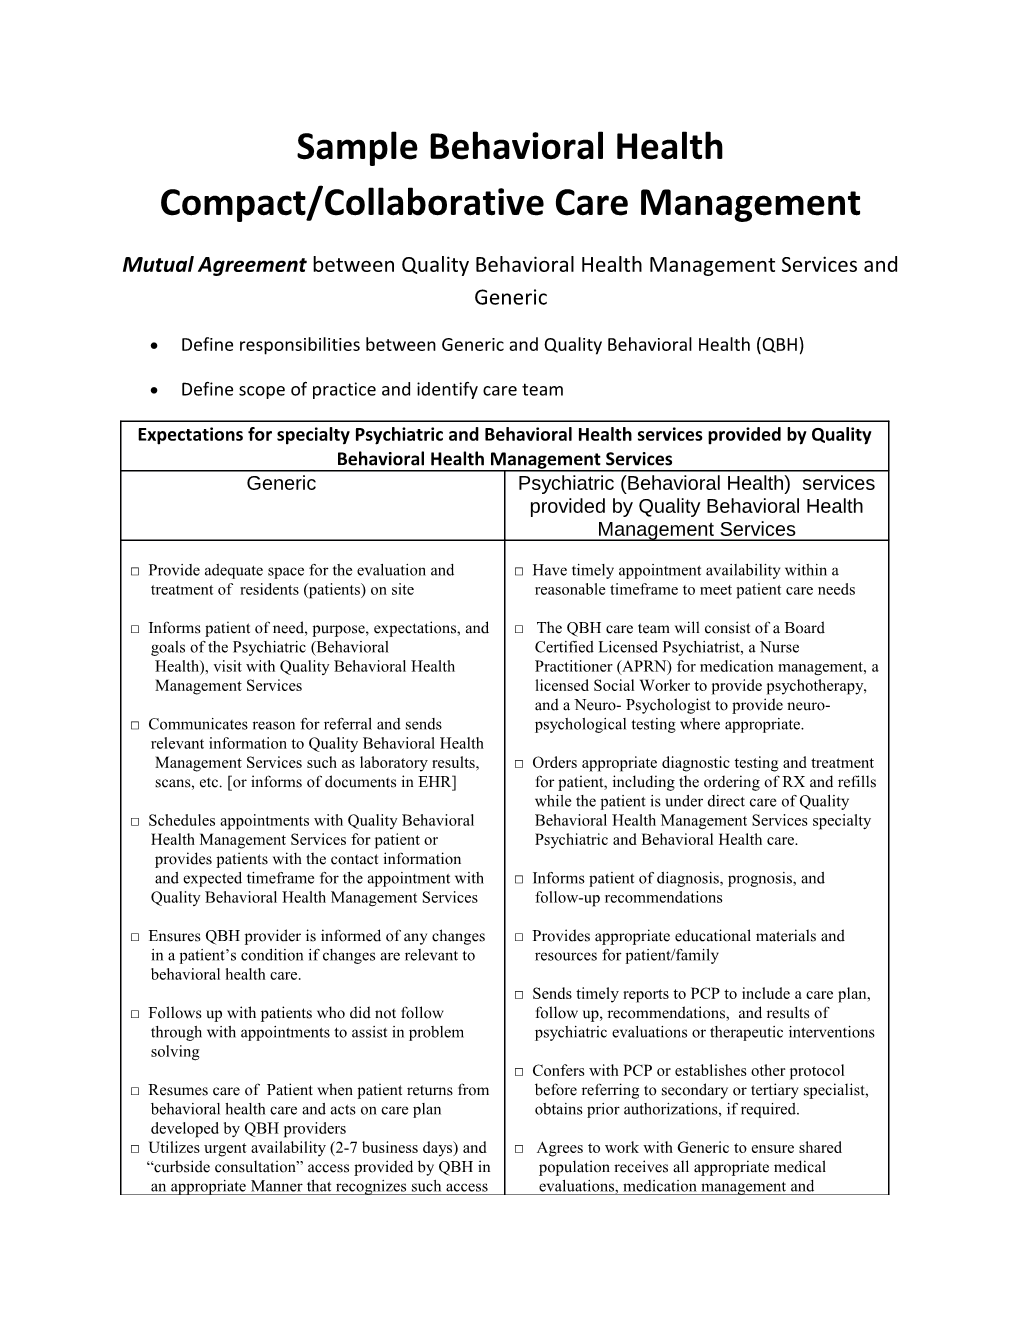 Sample Behavioral Health Compact/Collaborative Care Management